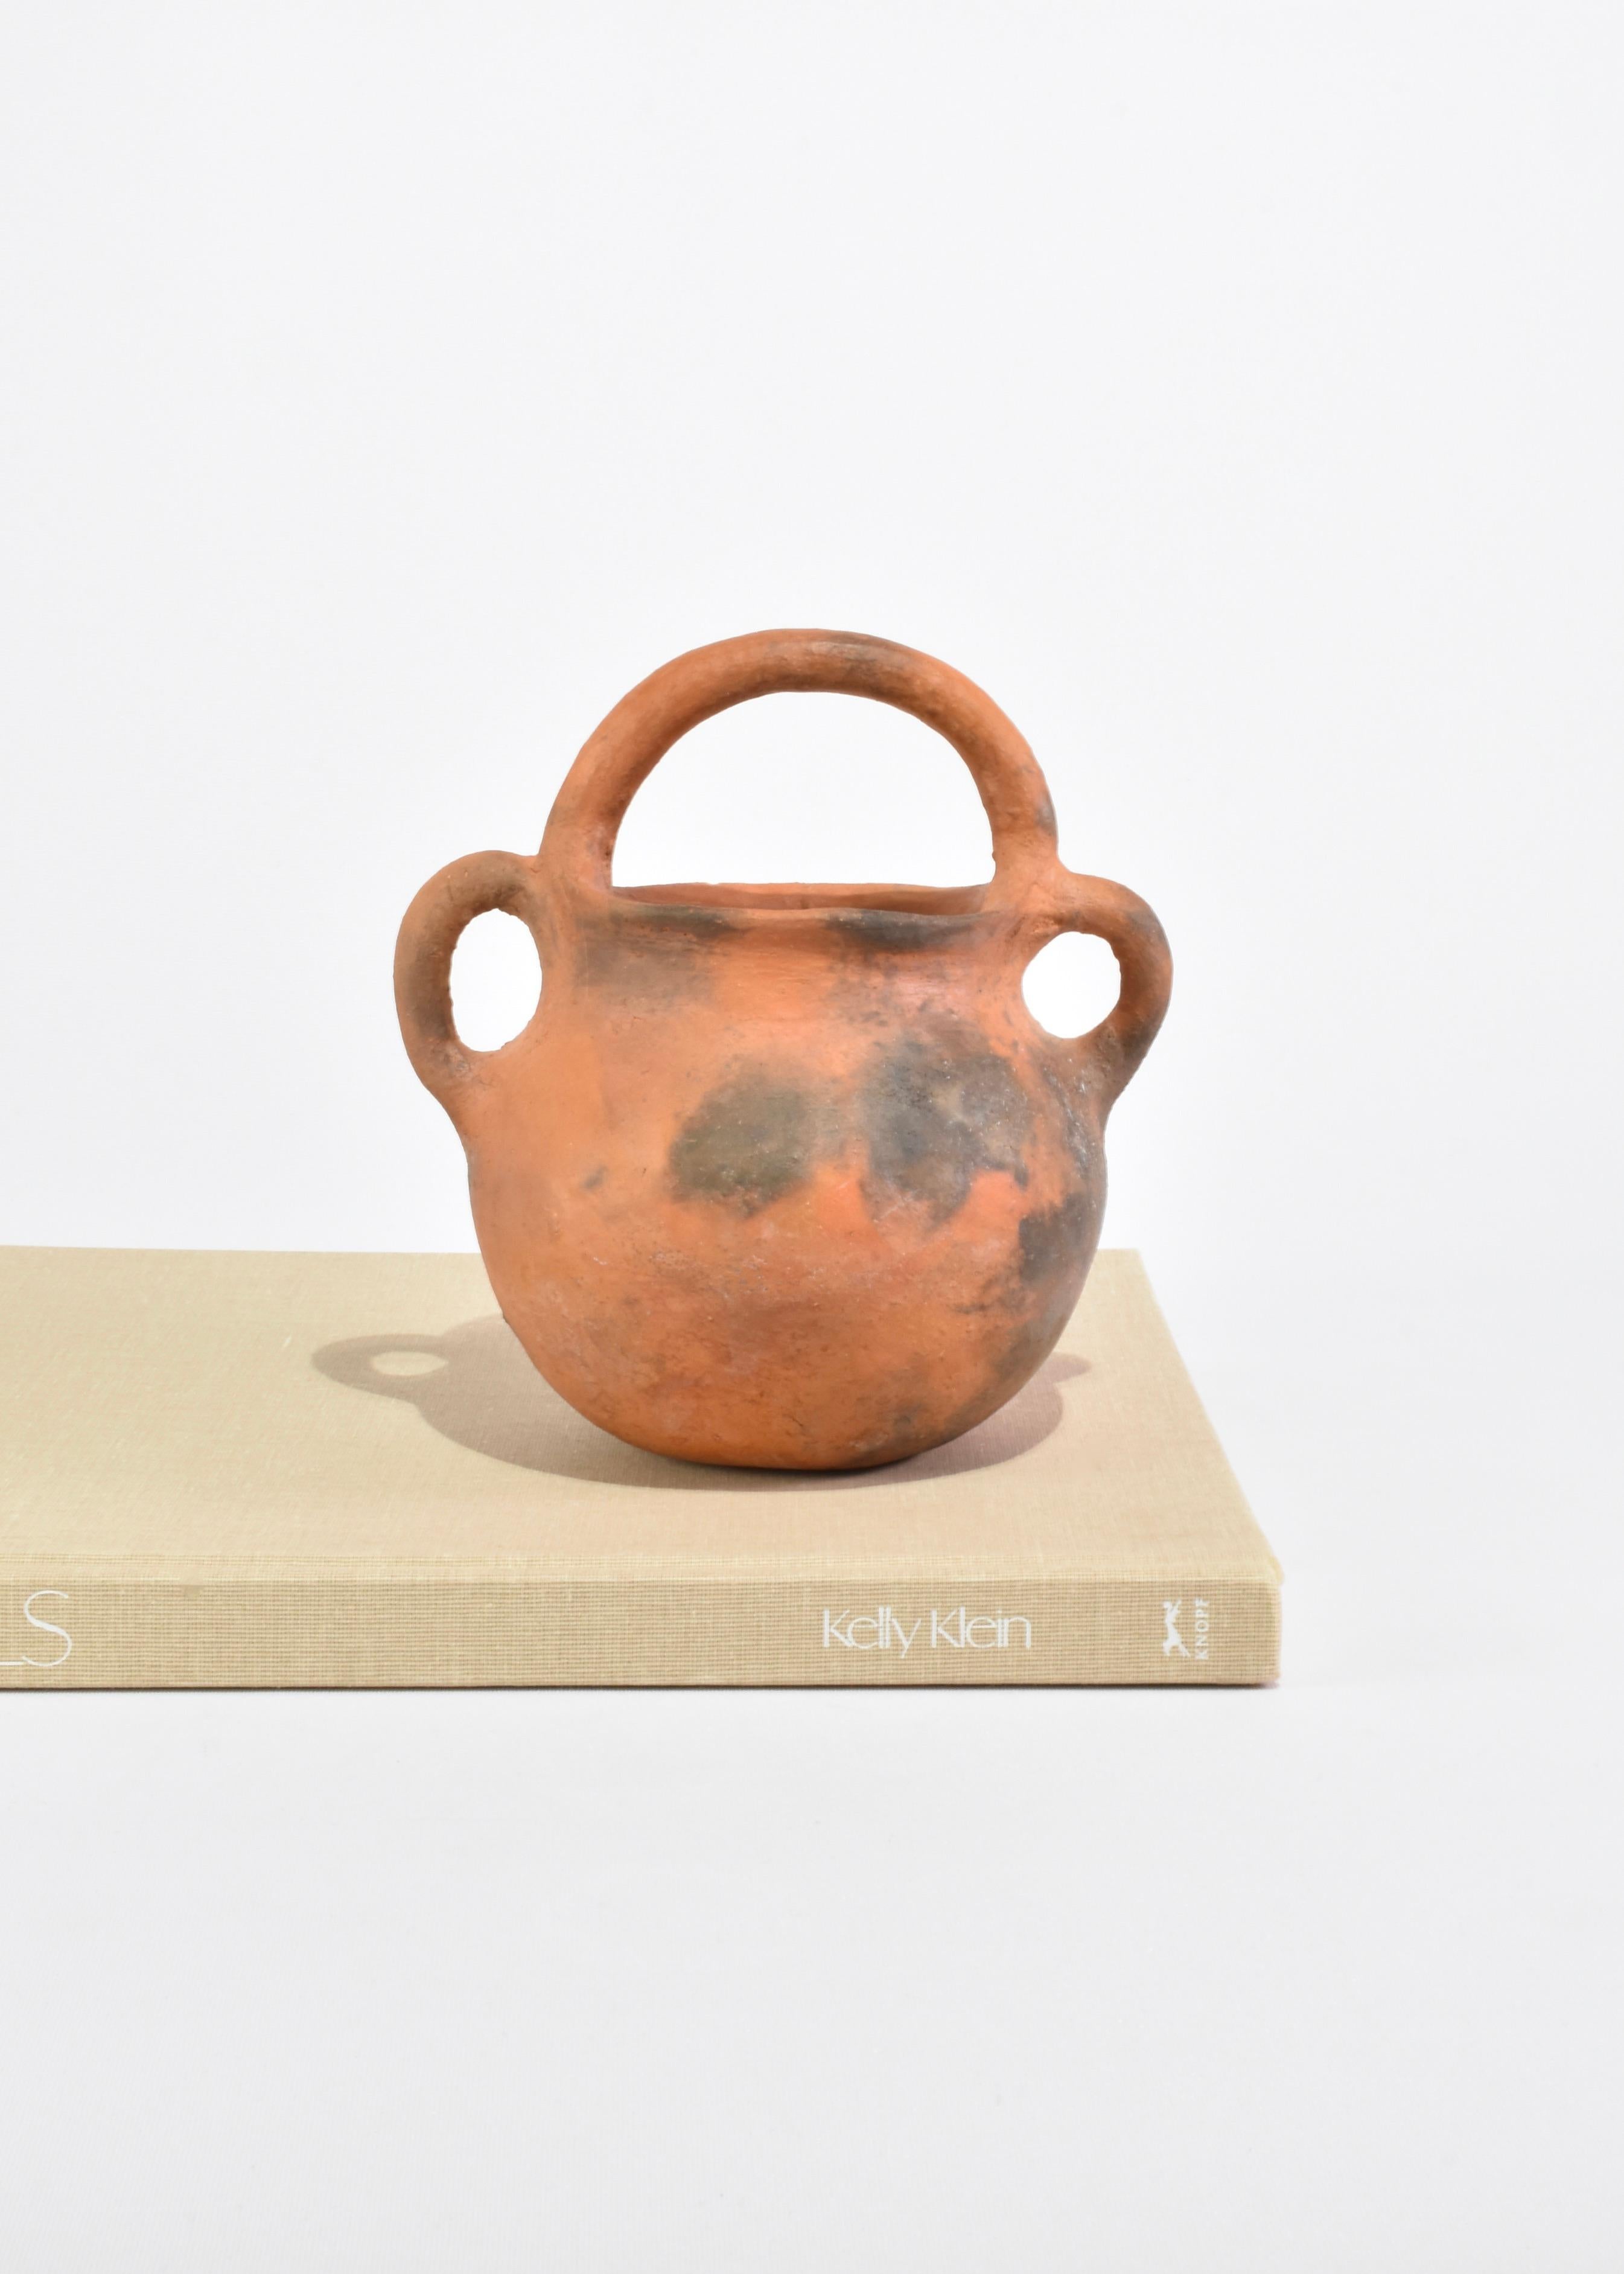 Vintage handmade terracotta ceramic vessel with three handles